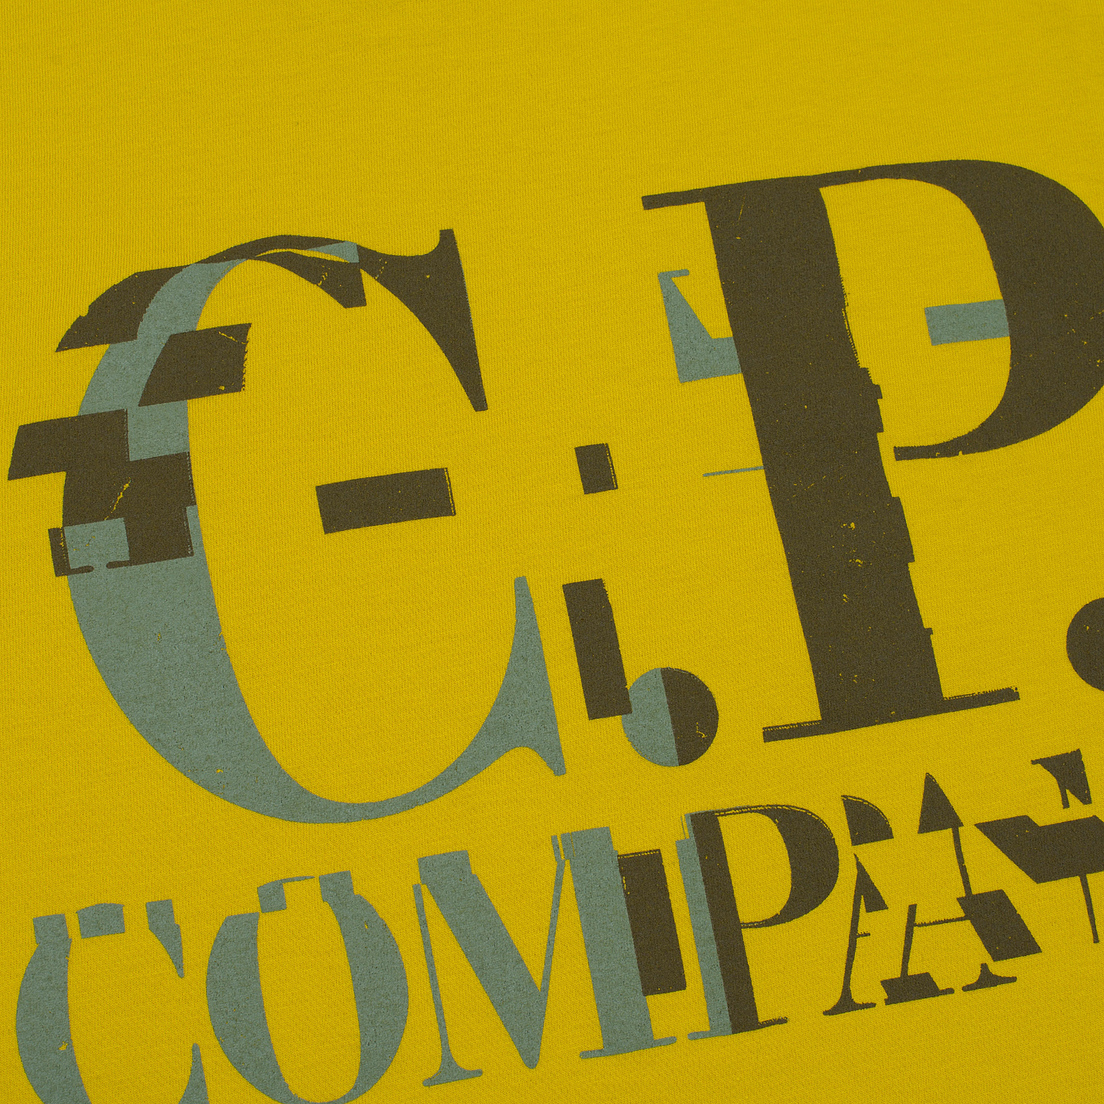 C.P. Company Мужская футболка Digital Print Logo